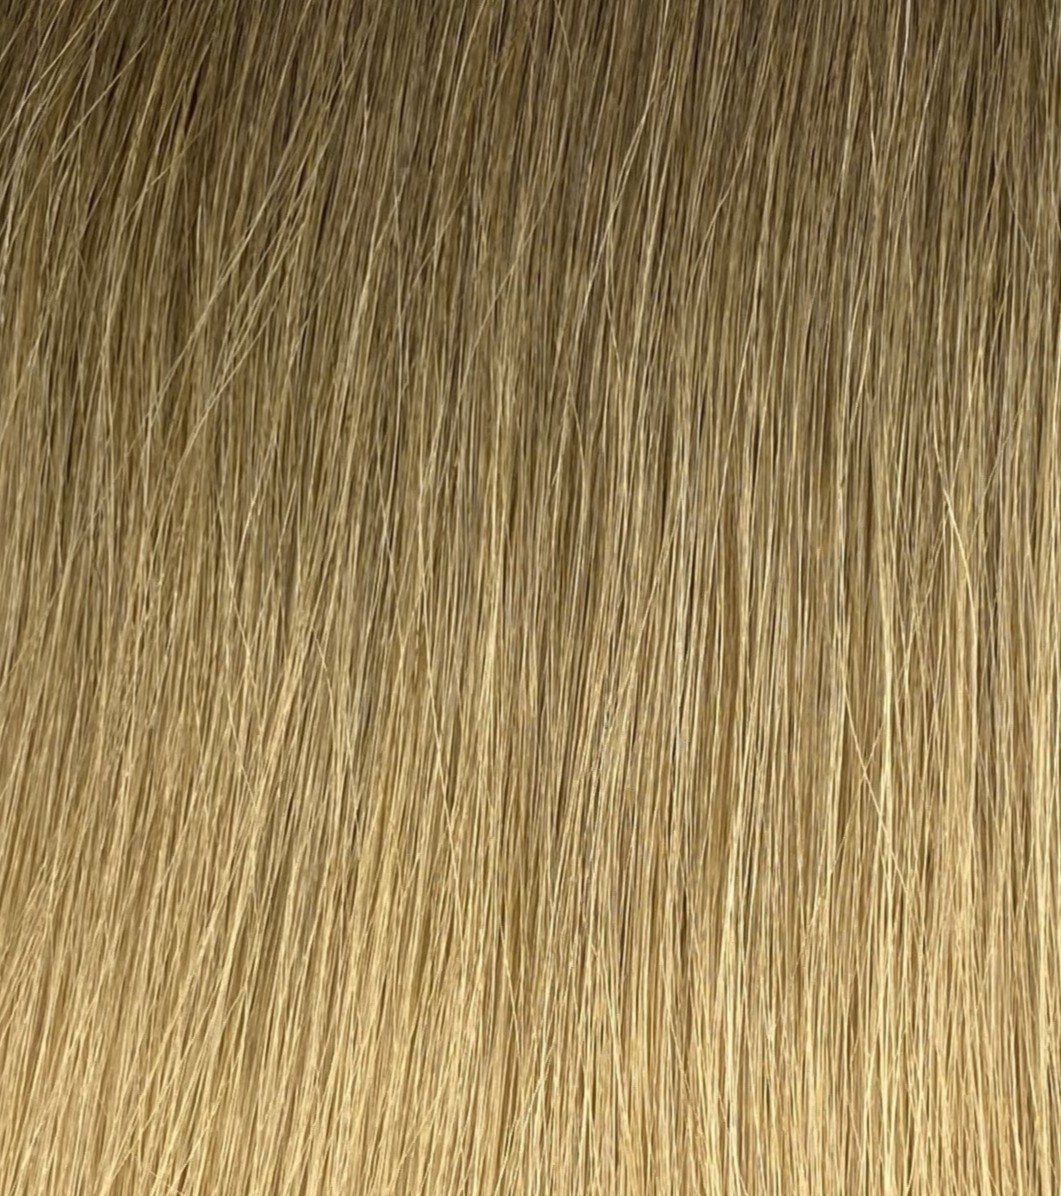 Single Weft Ombre #8 & DB4 - 20 Inches - Dark Blonde into Dark Golden Blonde - 60 Grams - Image 1